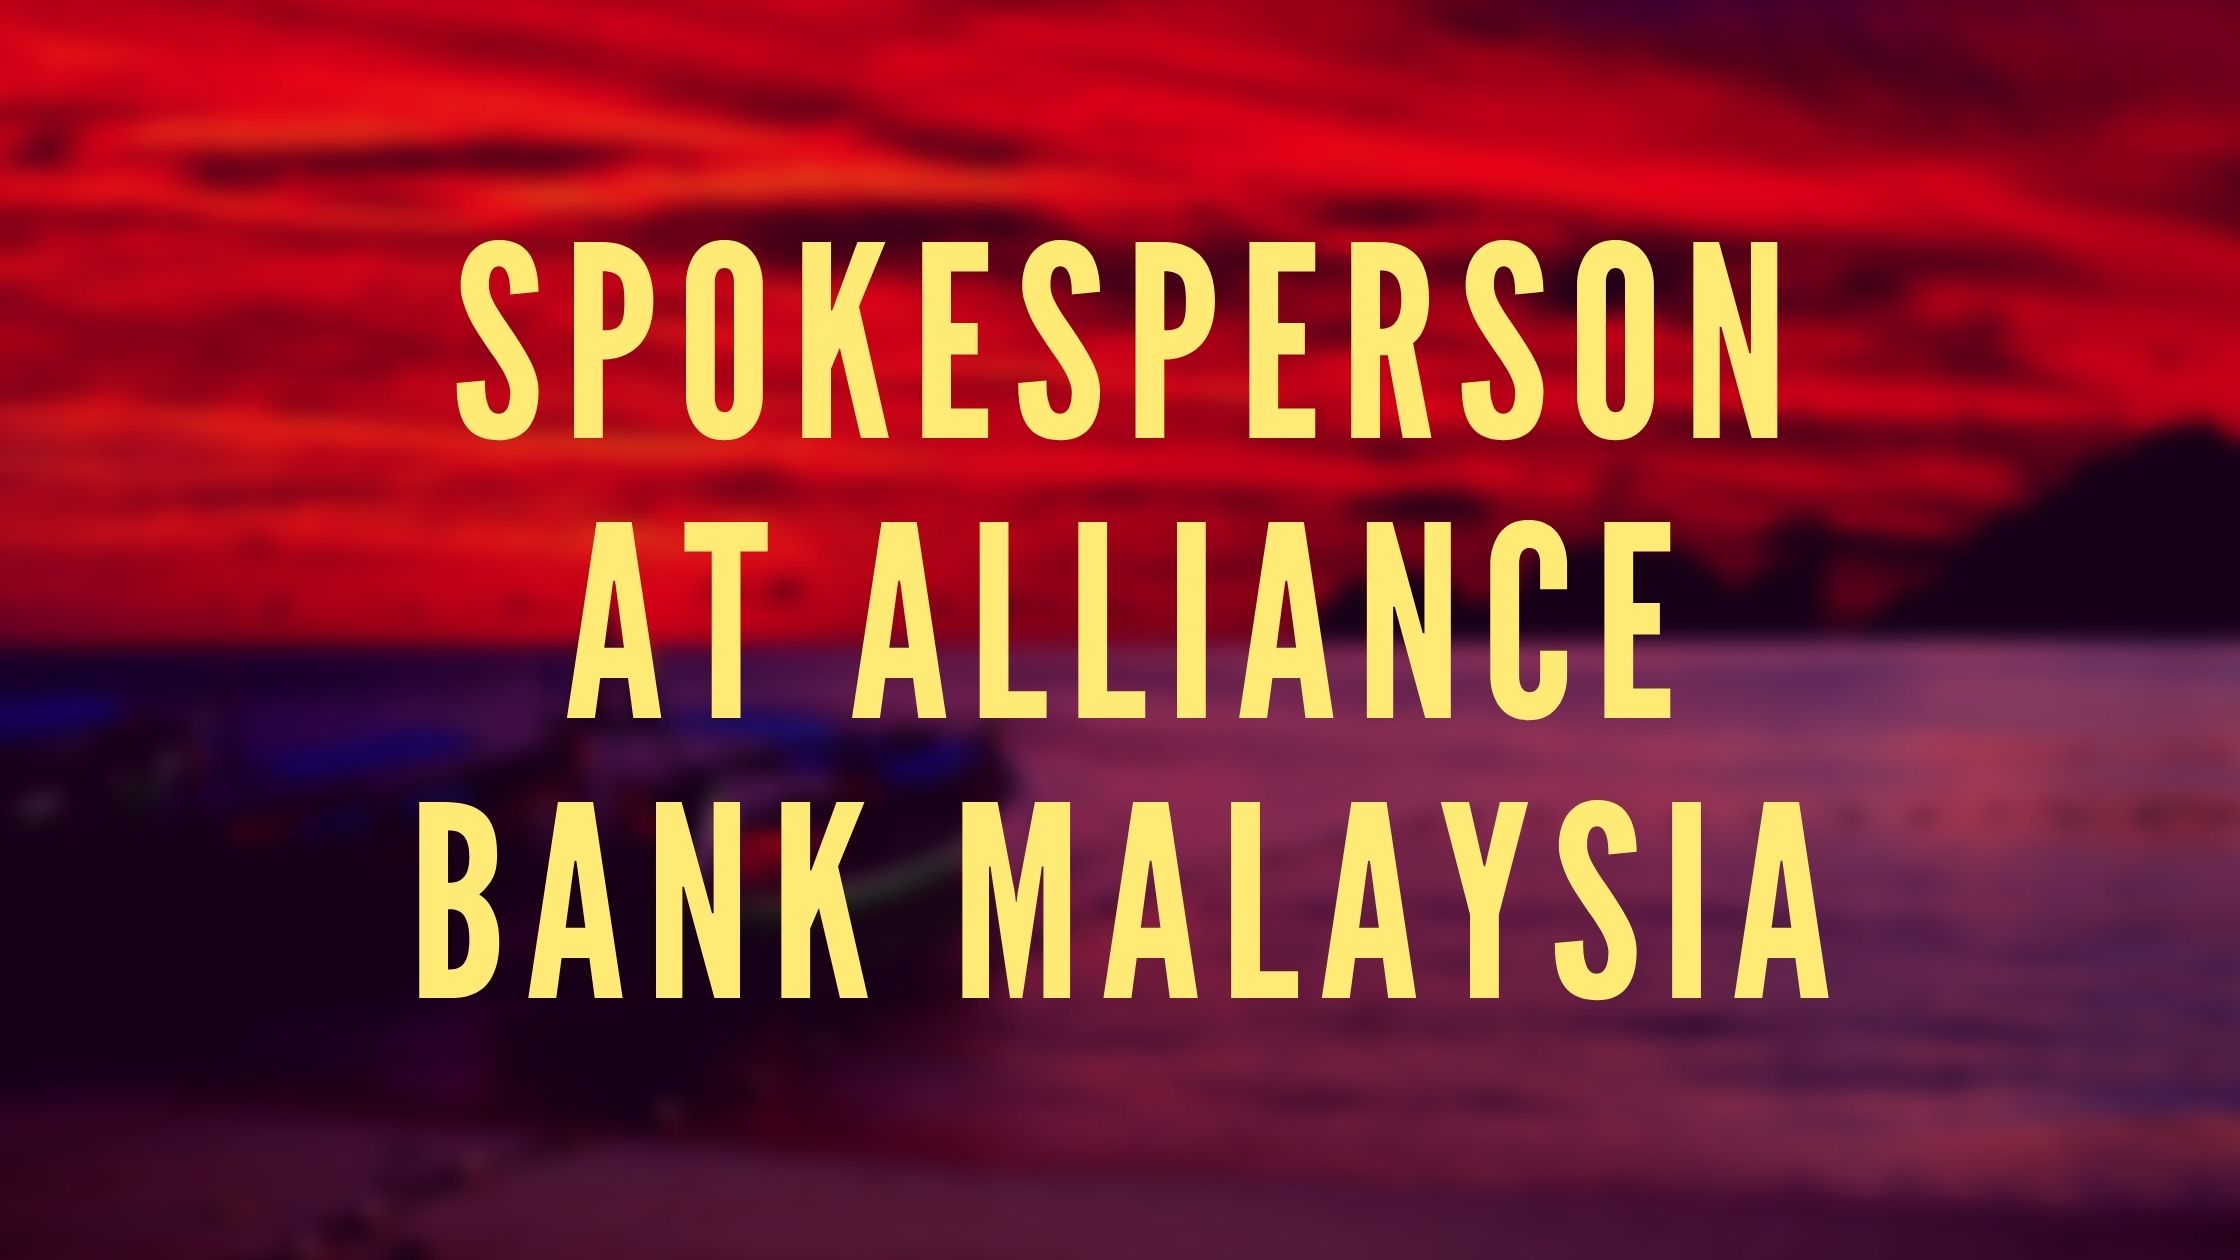 SPOKESPERSON AT ALLIANCE BANK MALAYSIA